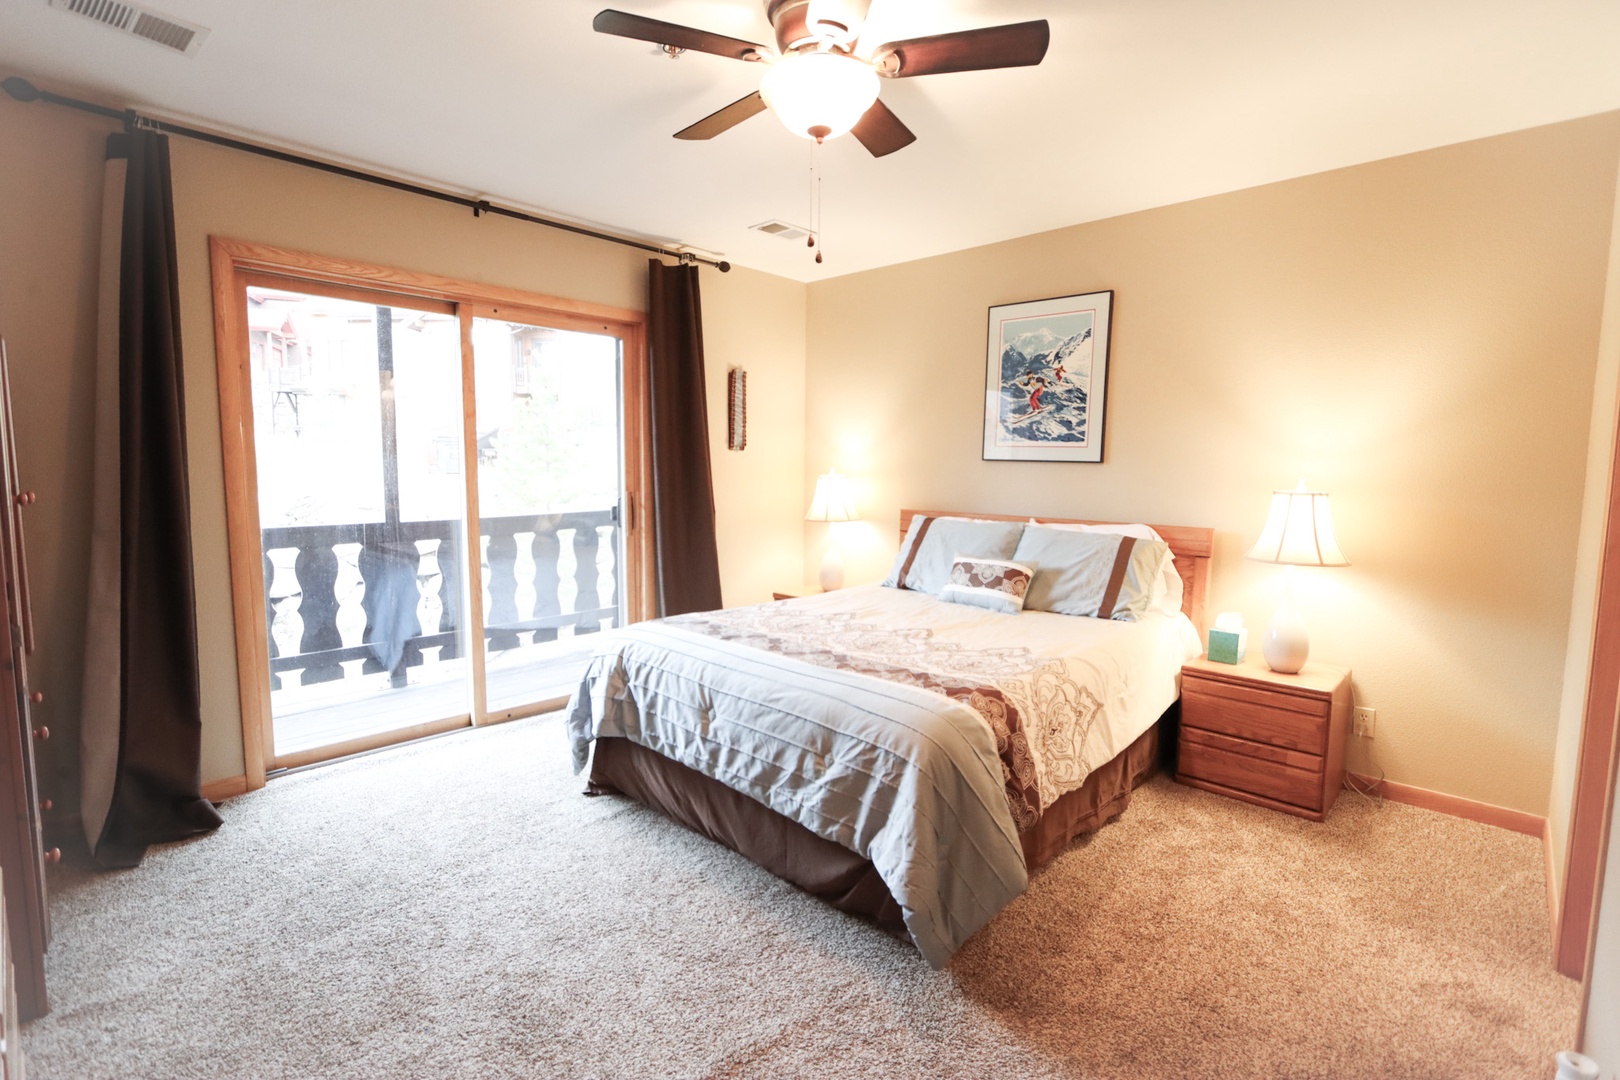 The queen suite offers a private en suite, TV, ceiling fan, & balcony access